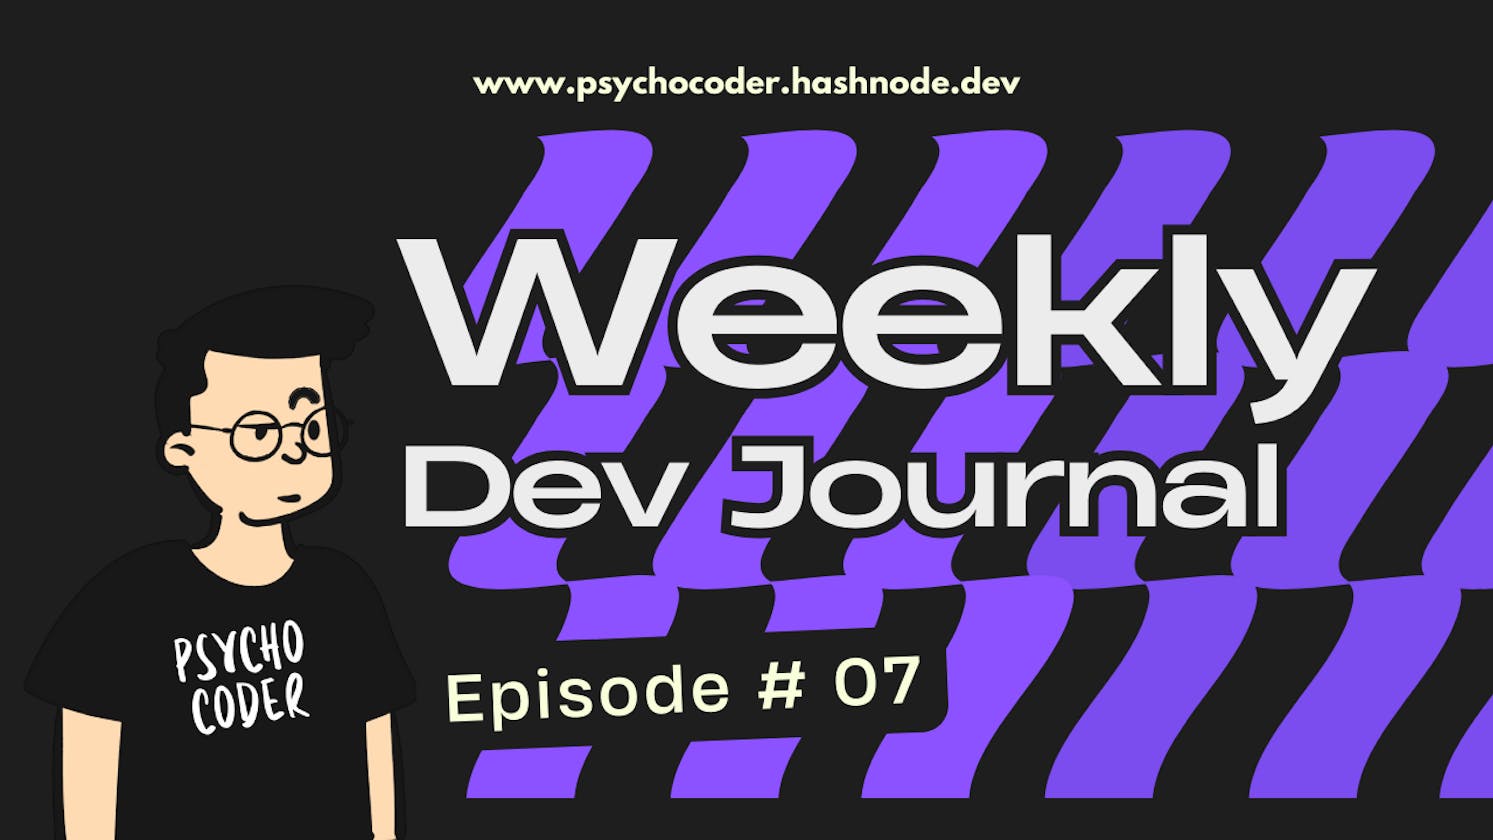 Weekly Dev Journal - Episode # 07